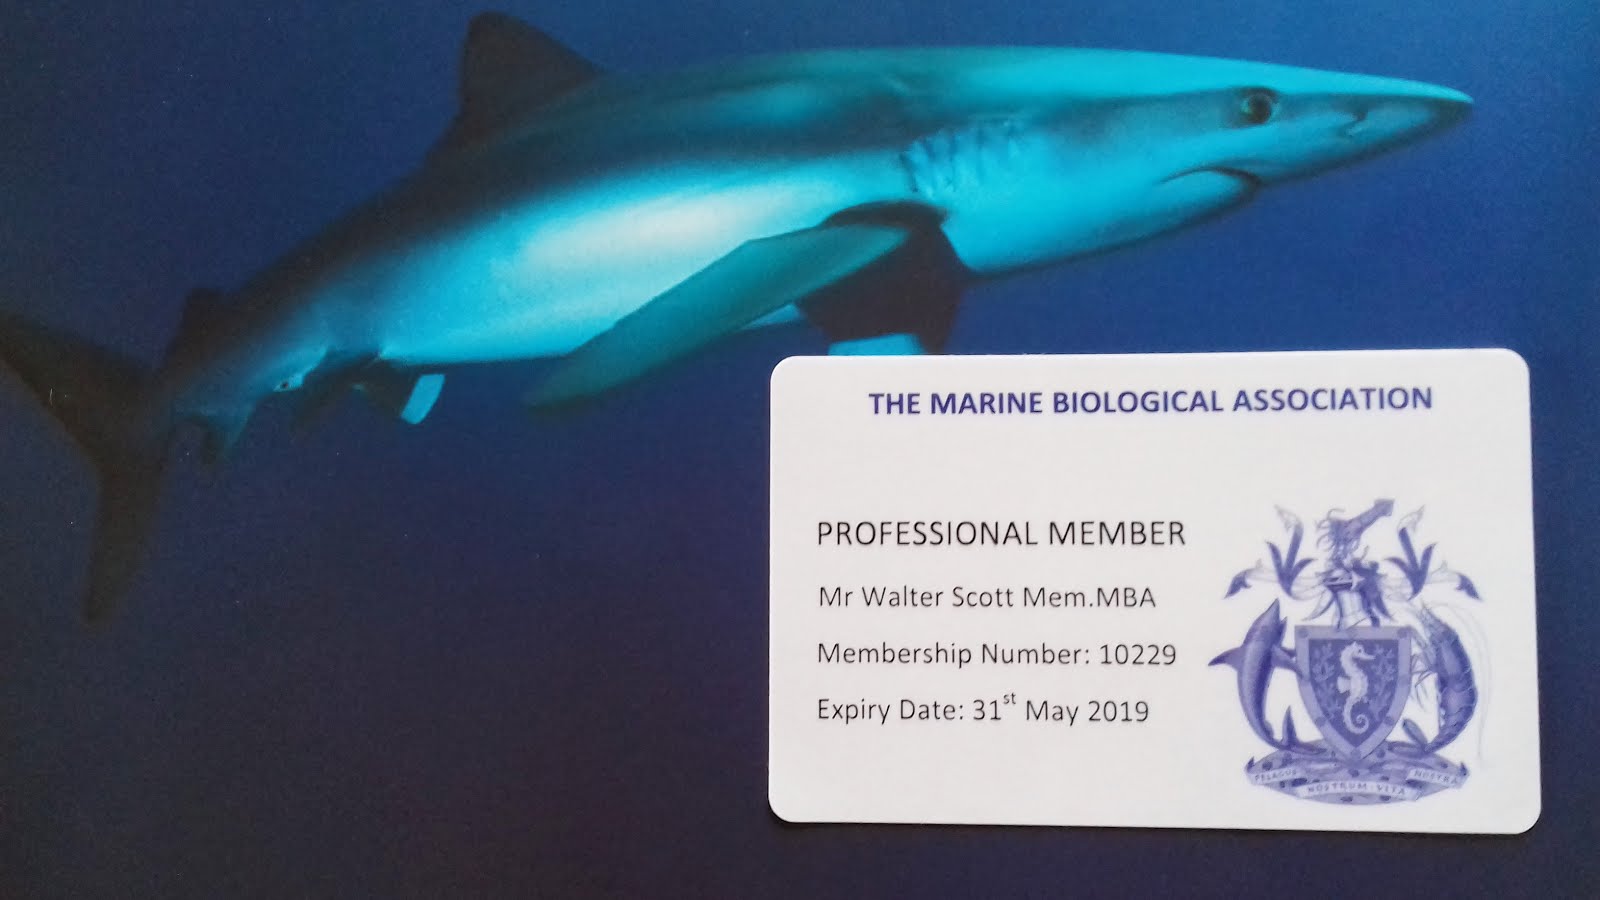 Professional Member of the Marine Biological Association